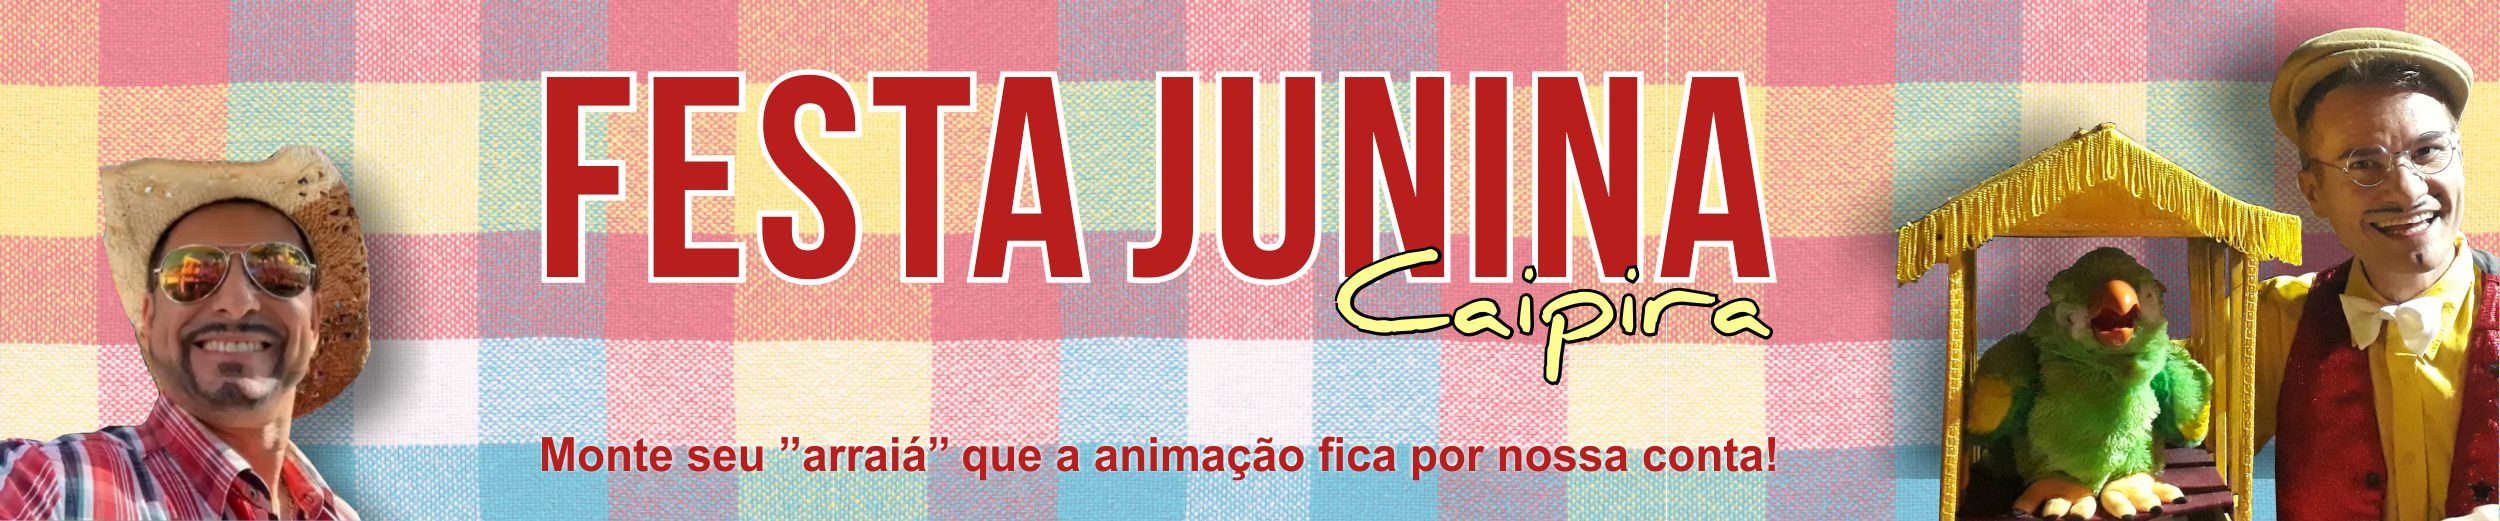 cia-do-bafafa-festa-junina-2105